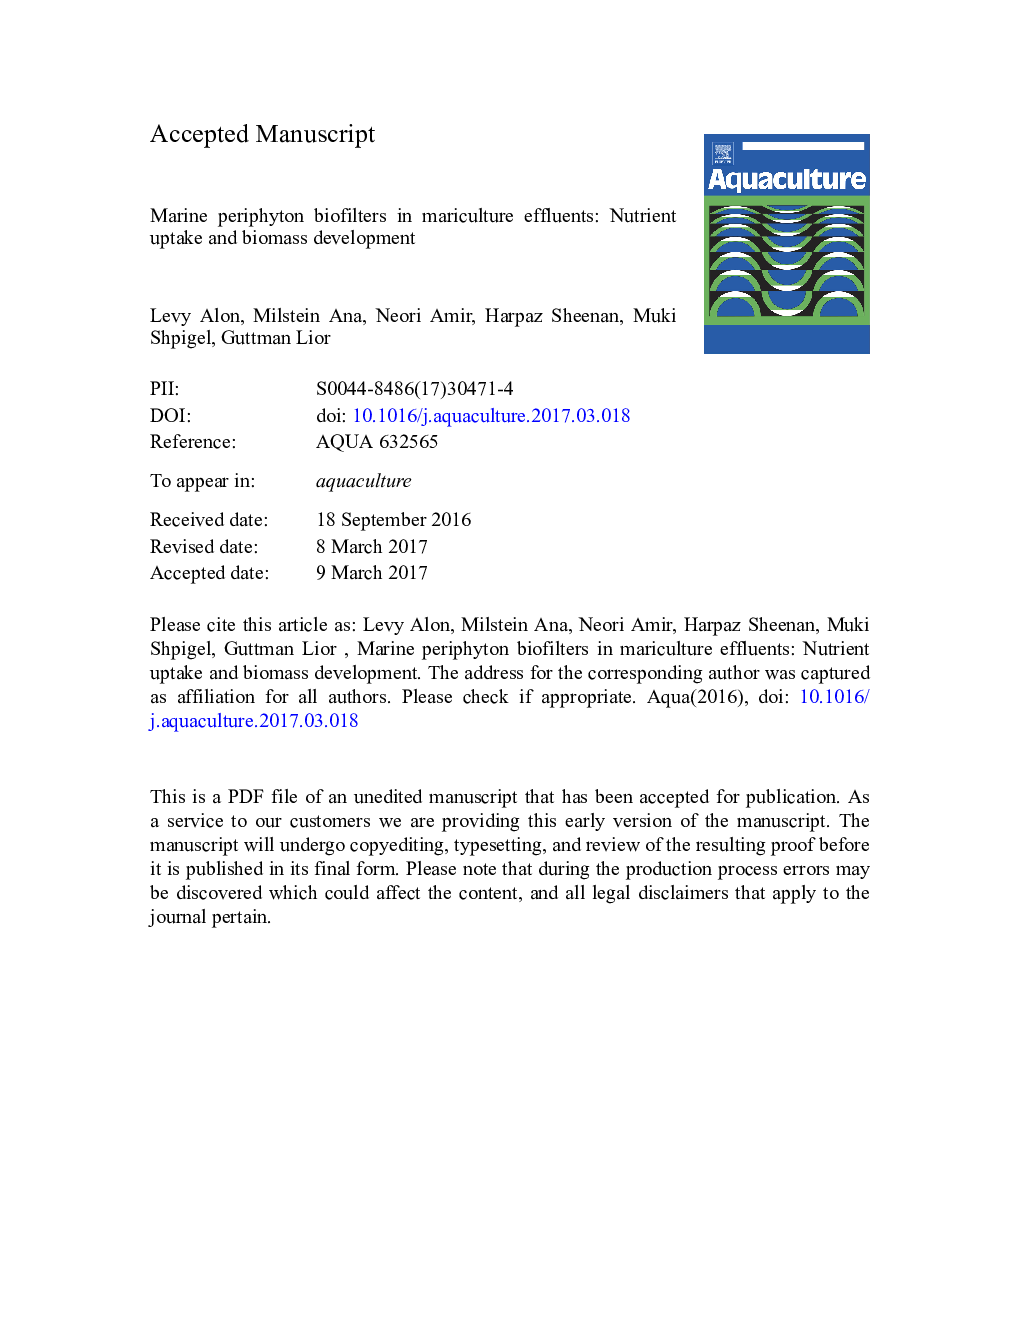 Marine periphyton biofilters in mariculture effluents: Nutrient uptake and biomass development